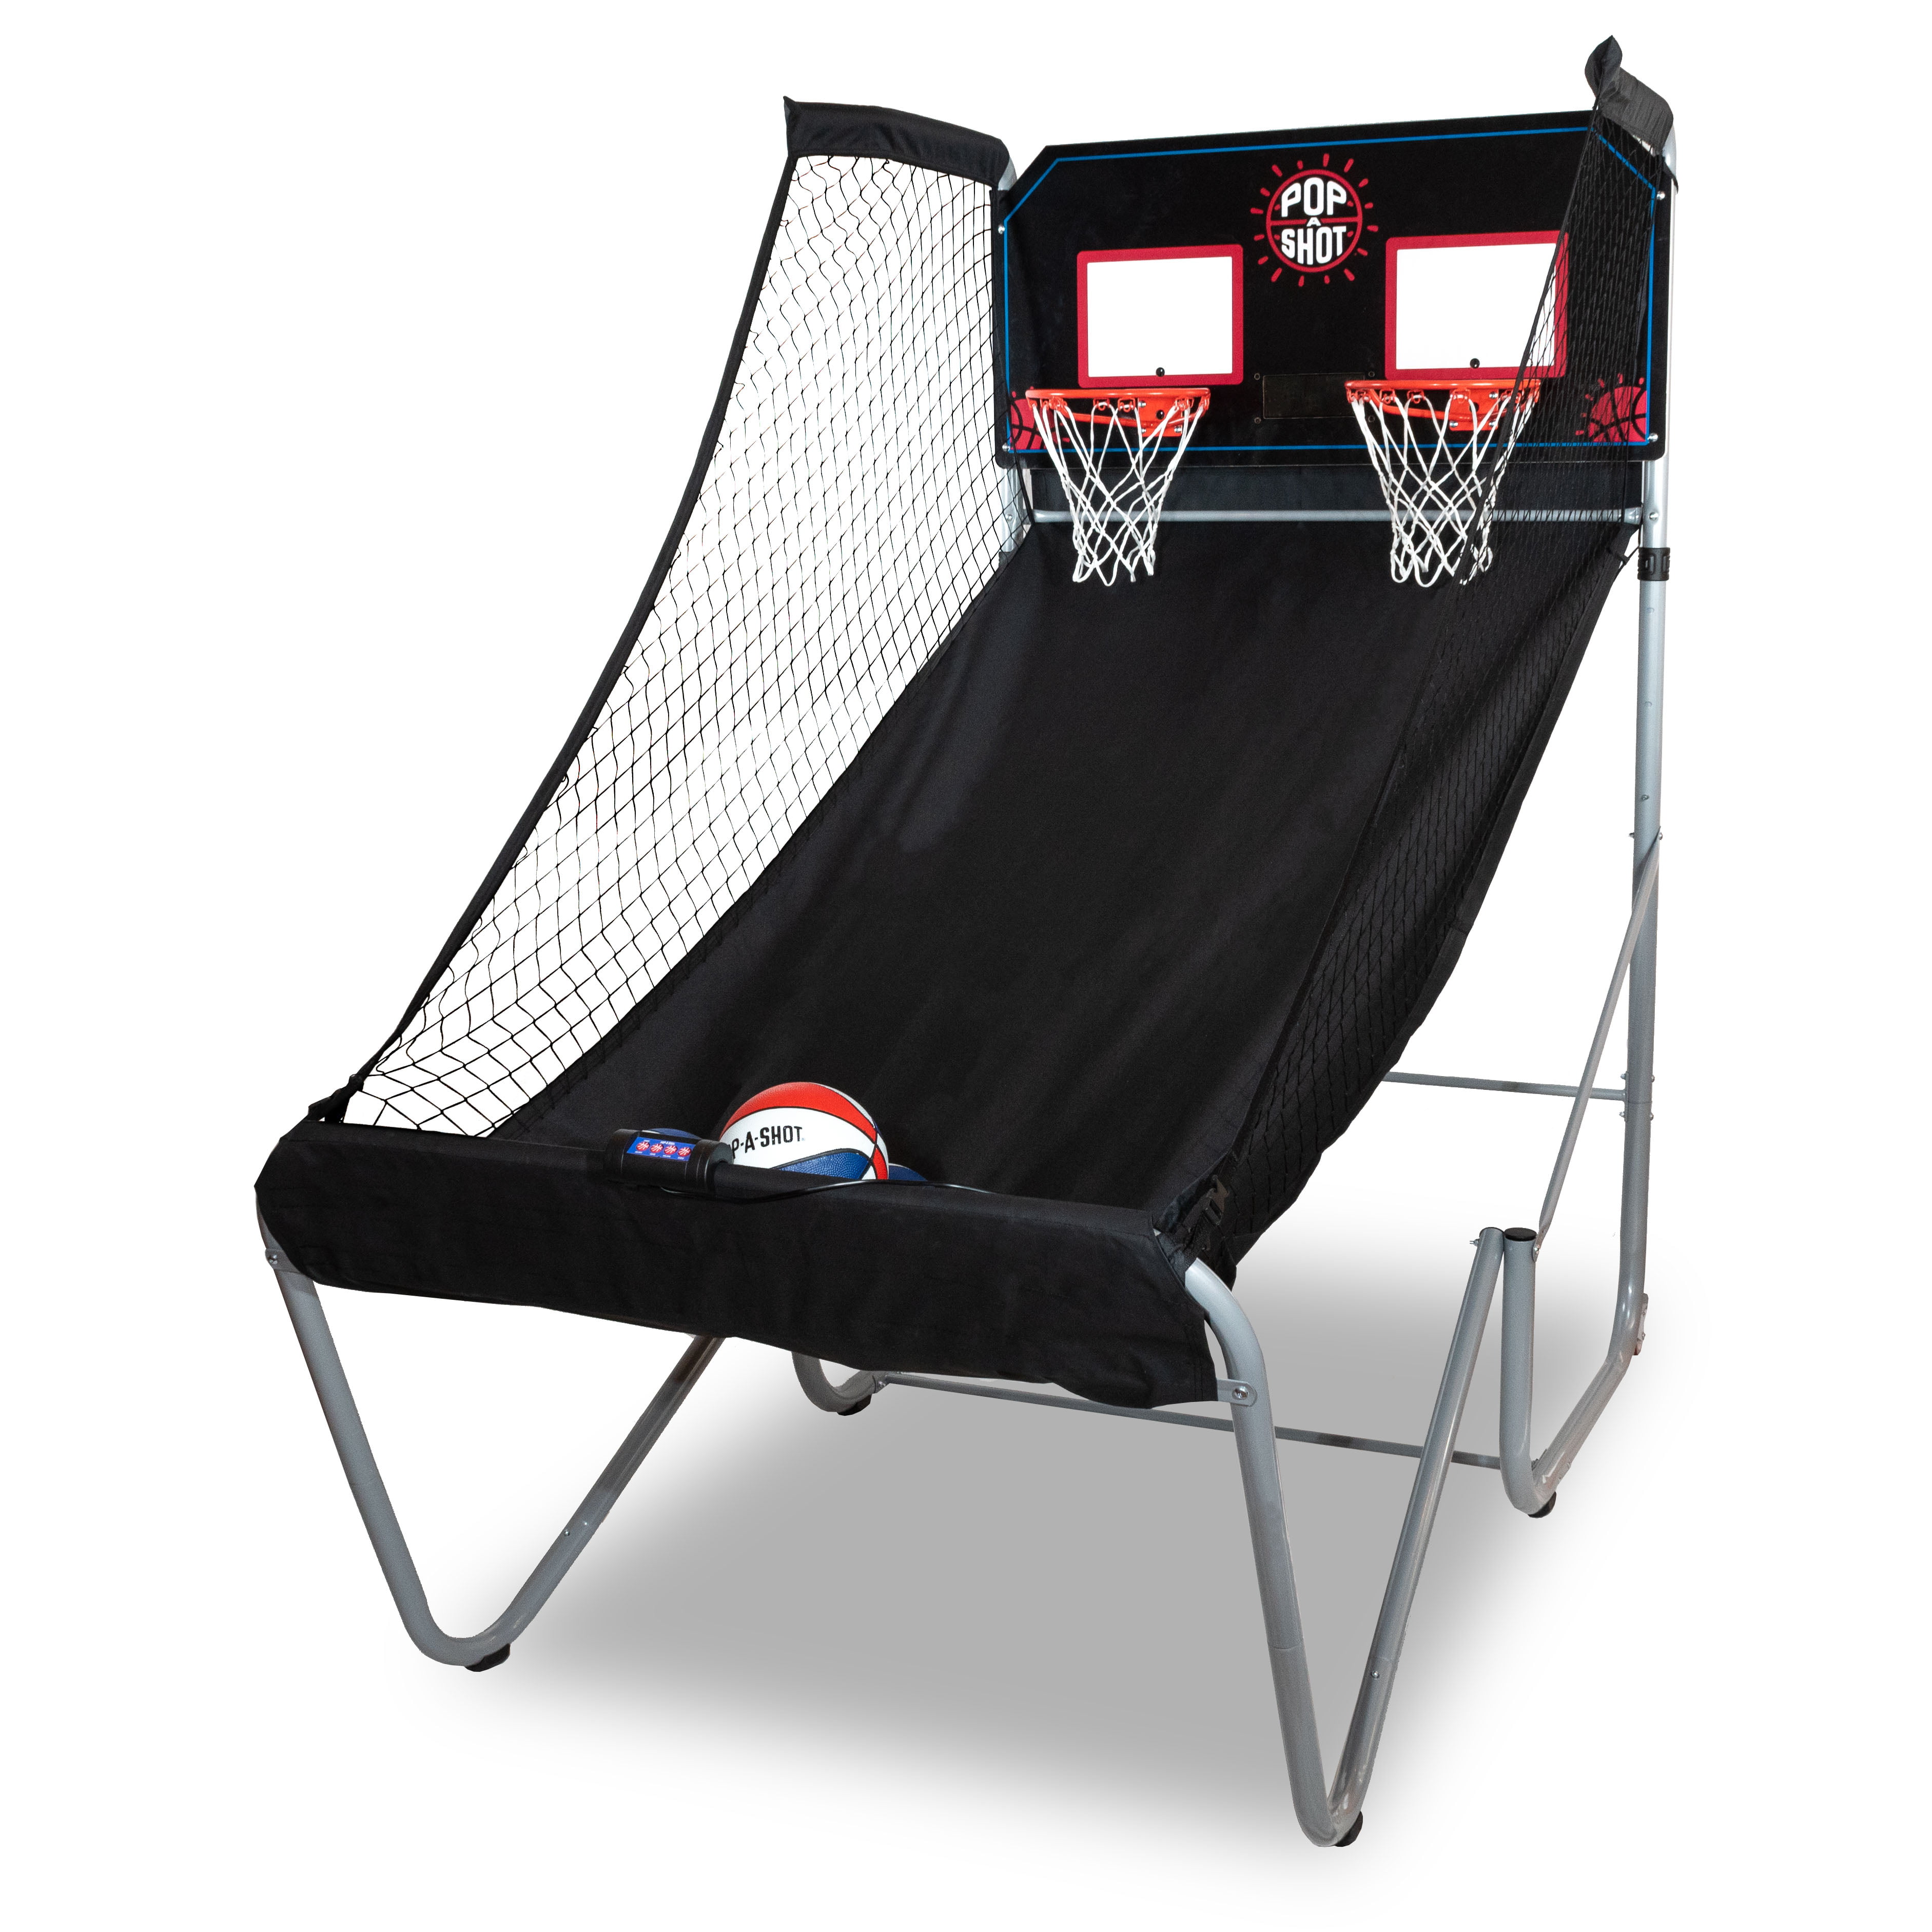 Pop-A-Shot Official Home Dual Shot Basketball Arcade Game - Black - Foldable Ramp - Adjustable Height - 7 Basketballs - 16 Game Modes